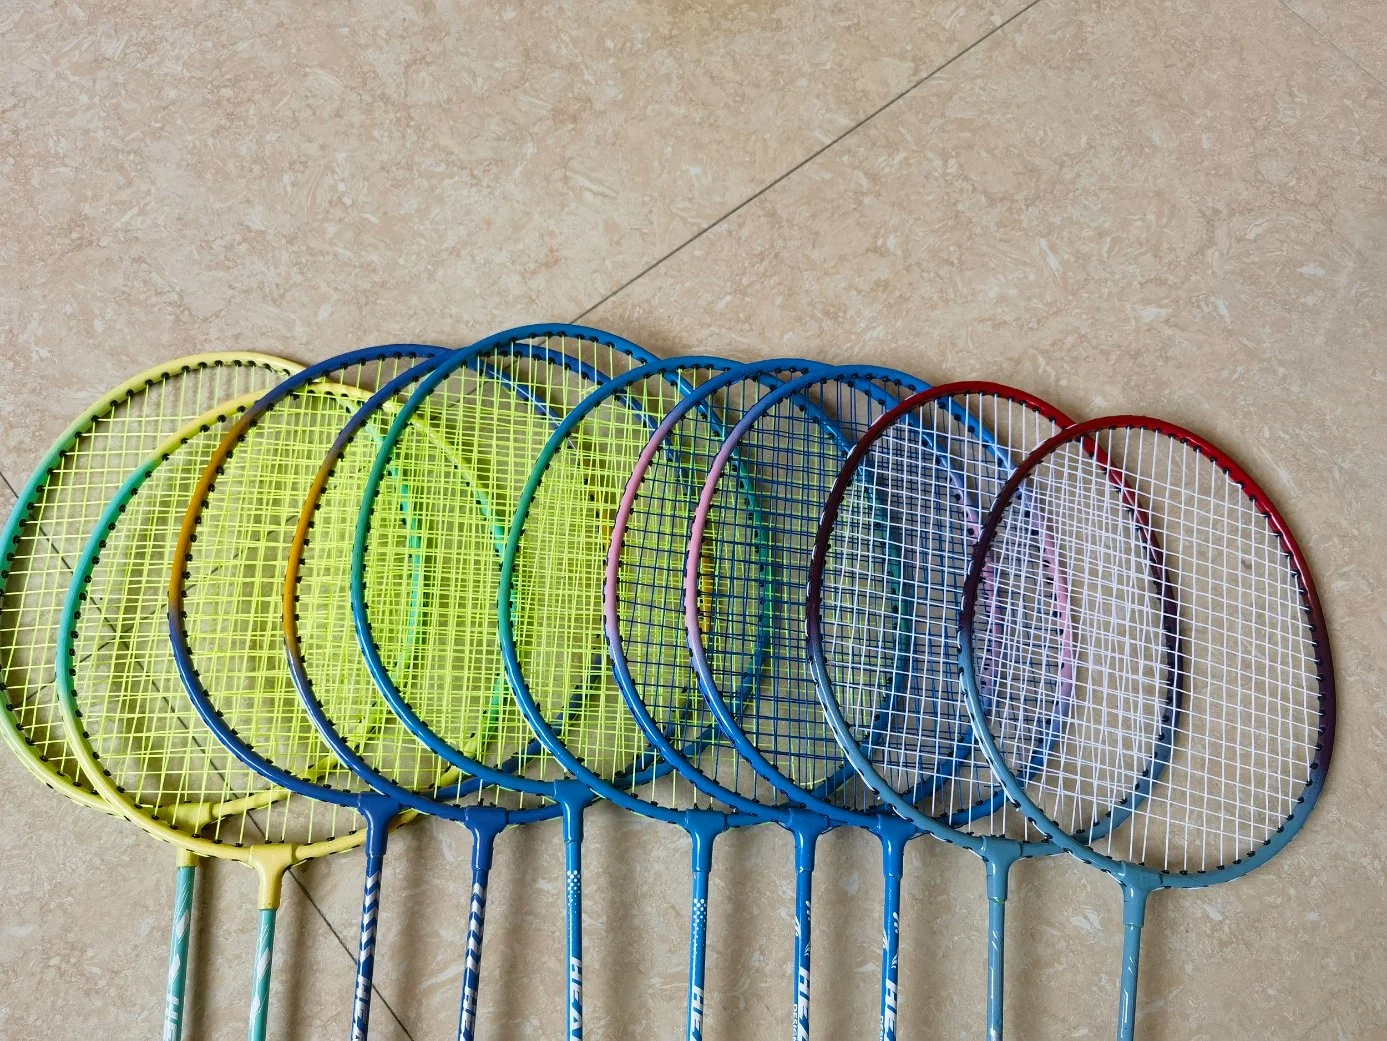 Acabados de Aço de estoque raquete de badminton ferro de boa qualidade Sporting Badminton Racket com Junta T 2 Raquetes com 1 Estojo de PVC